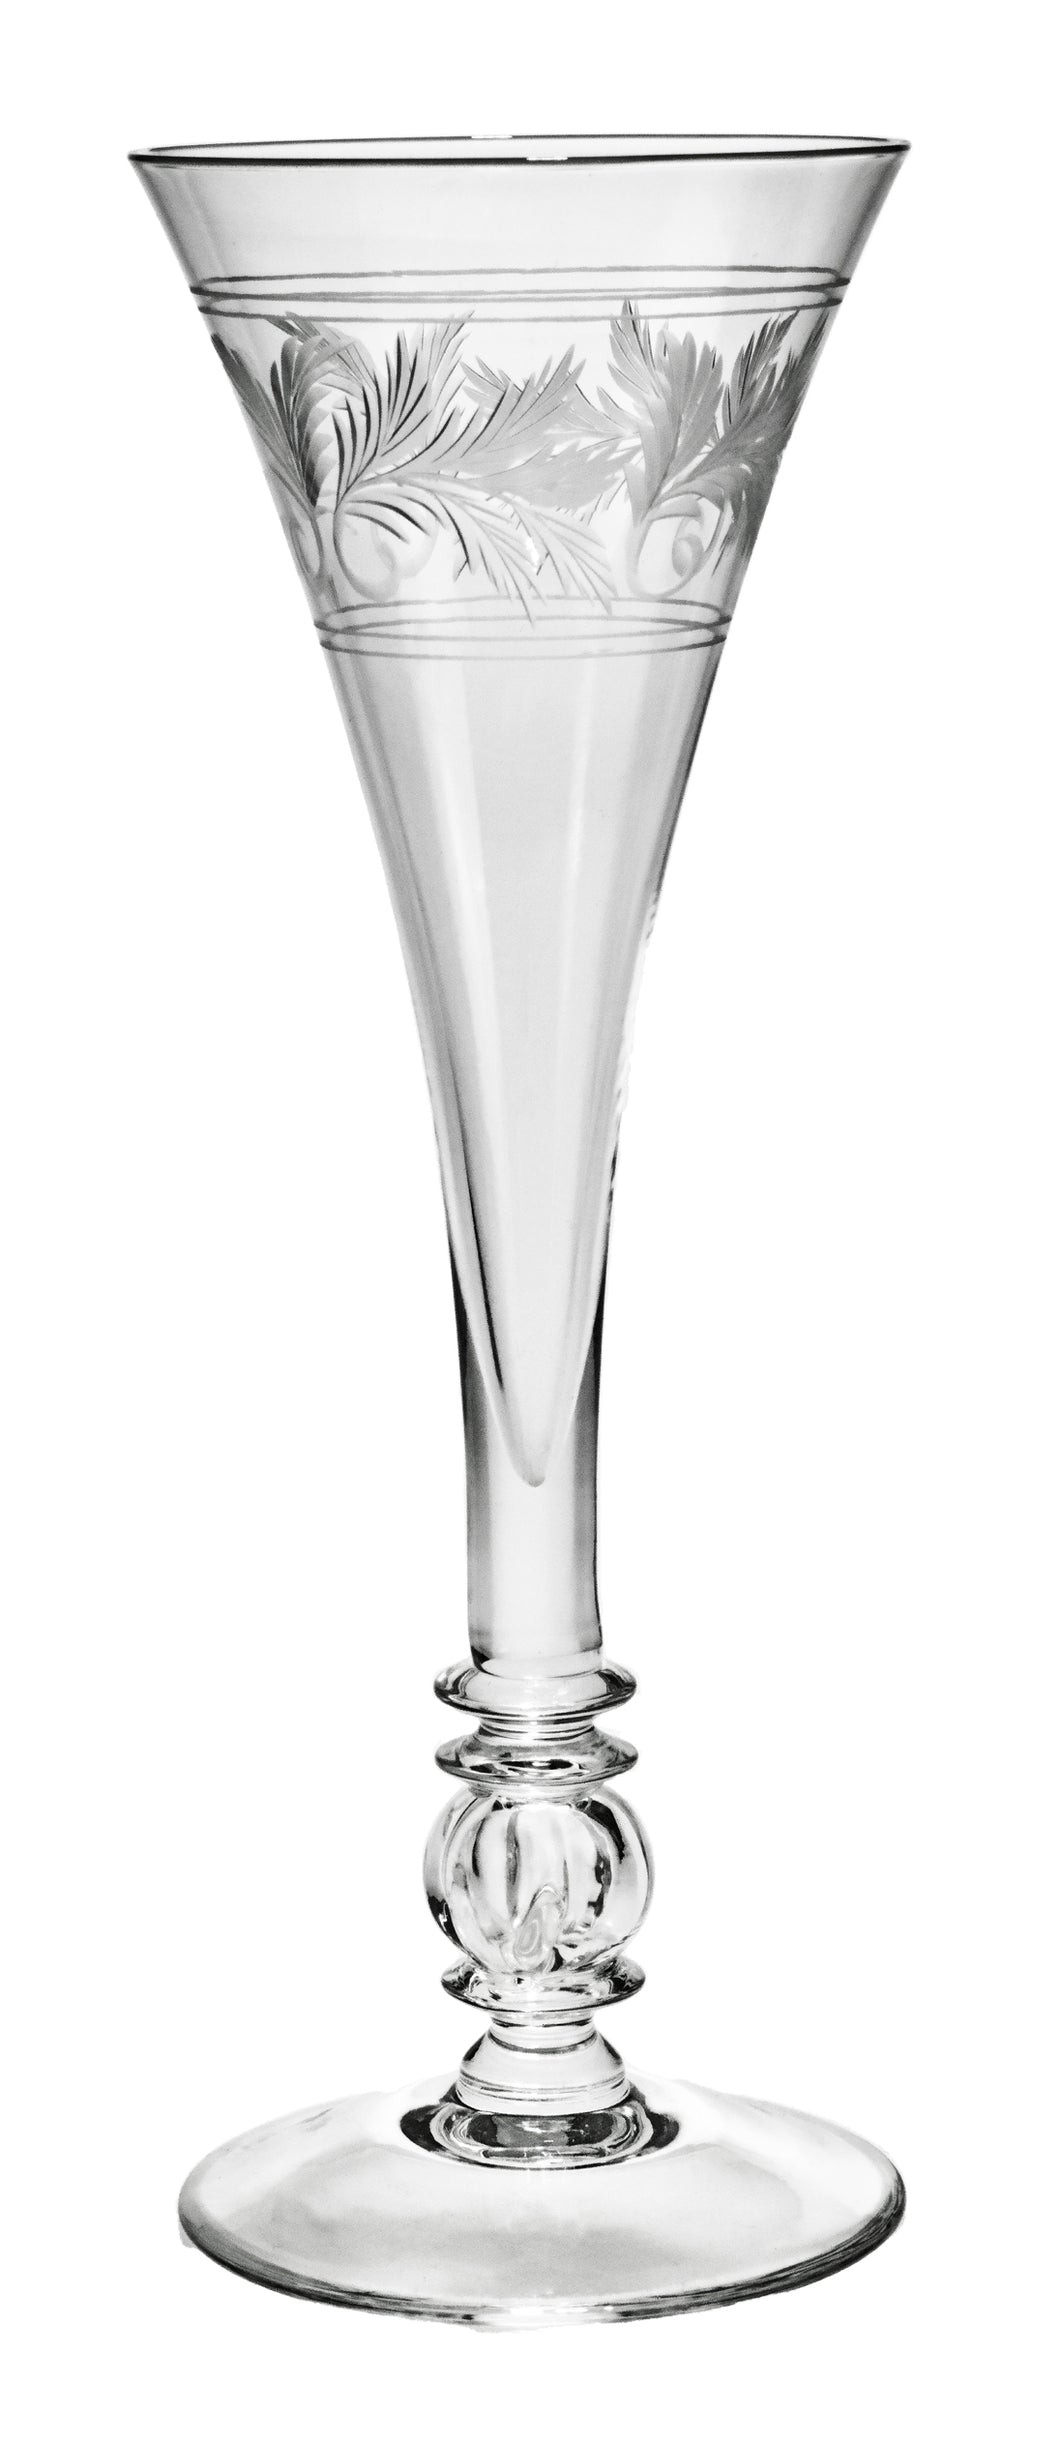 PETERSBURG klar, Gravur 'Springbock' - Sektglas 214 mm (Abverkauf)